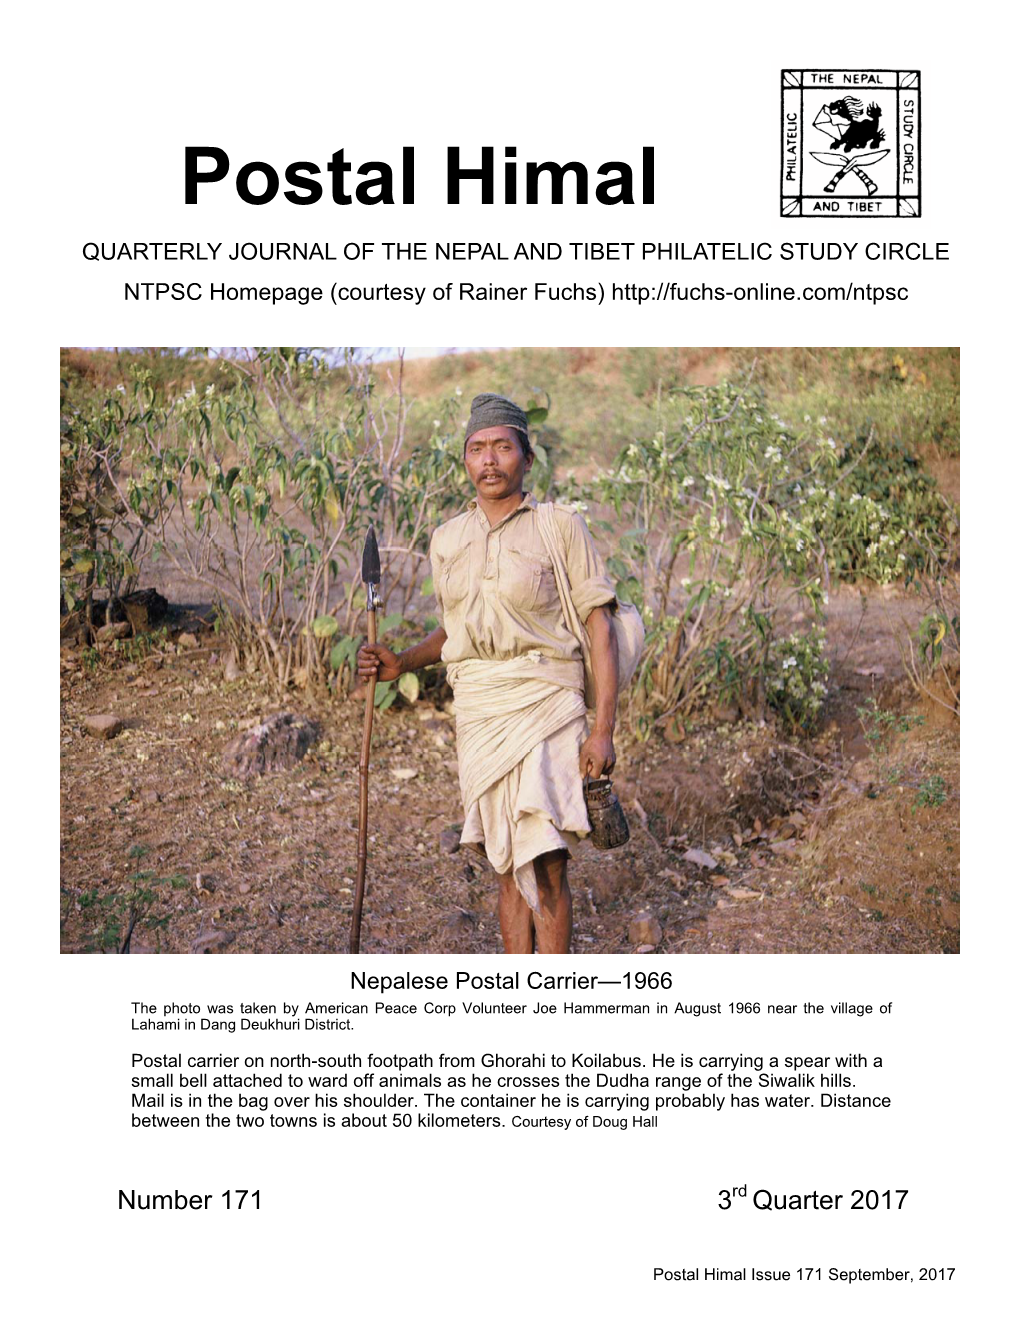 Postal Himal Sept 2017